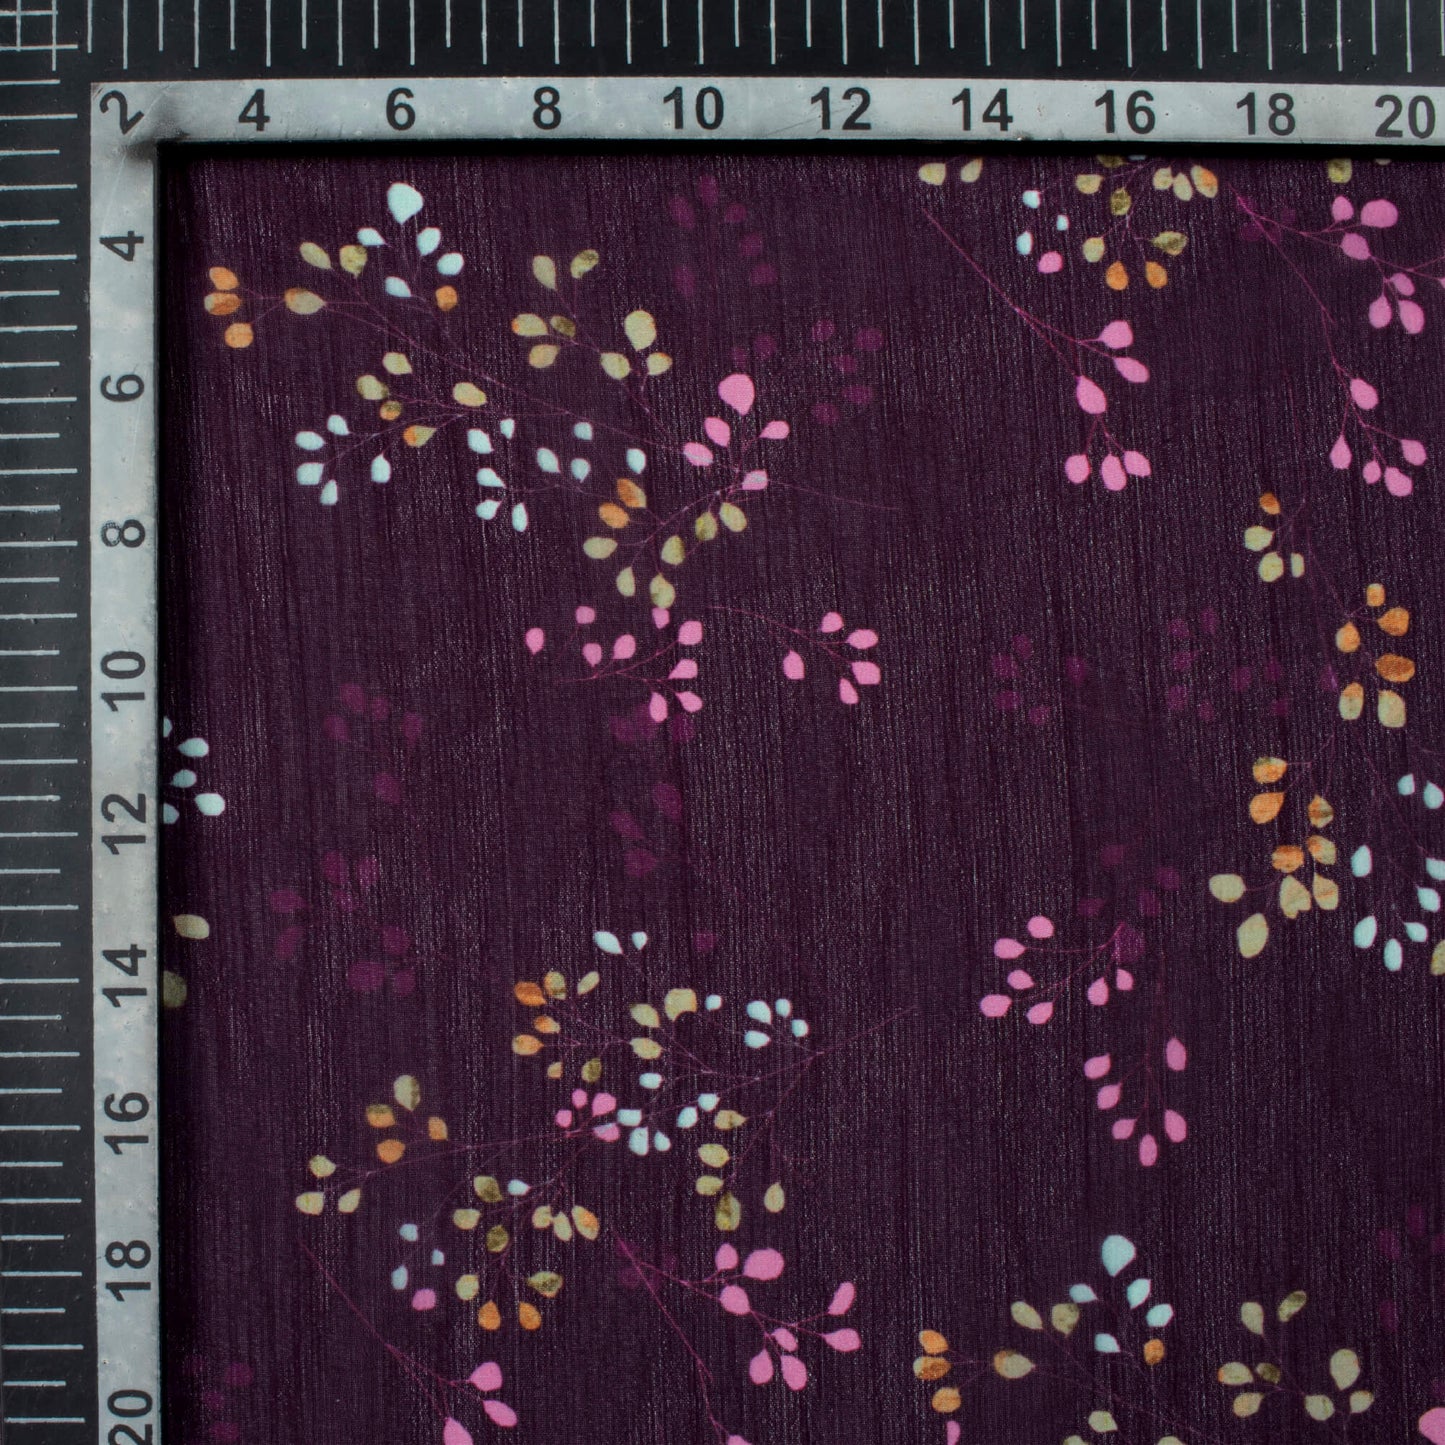 Wine Purple And Taffy Pink Leaf Pattern Digital Print Chiffon Fabric